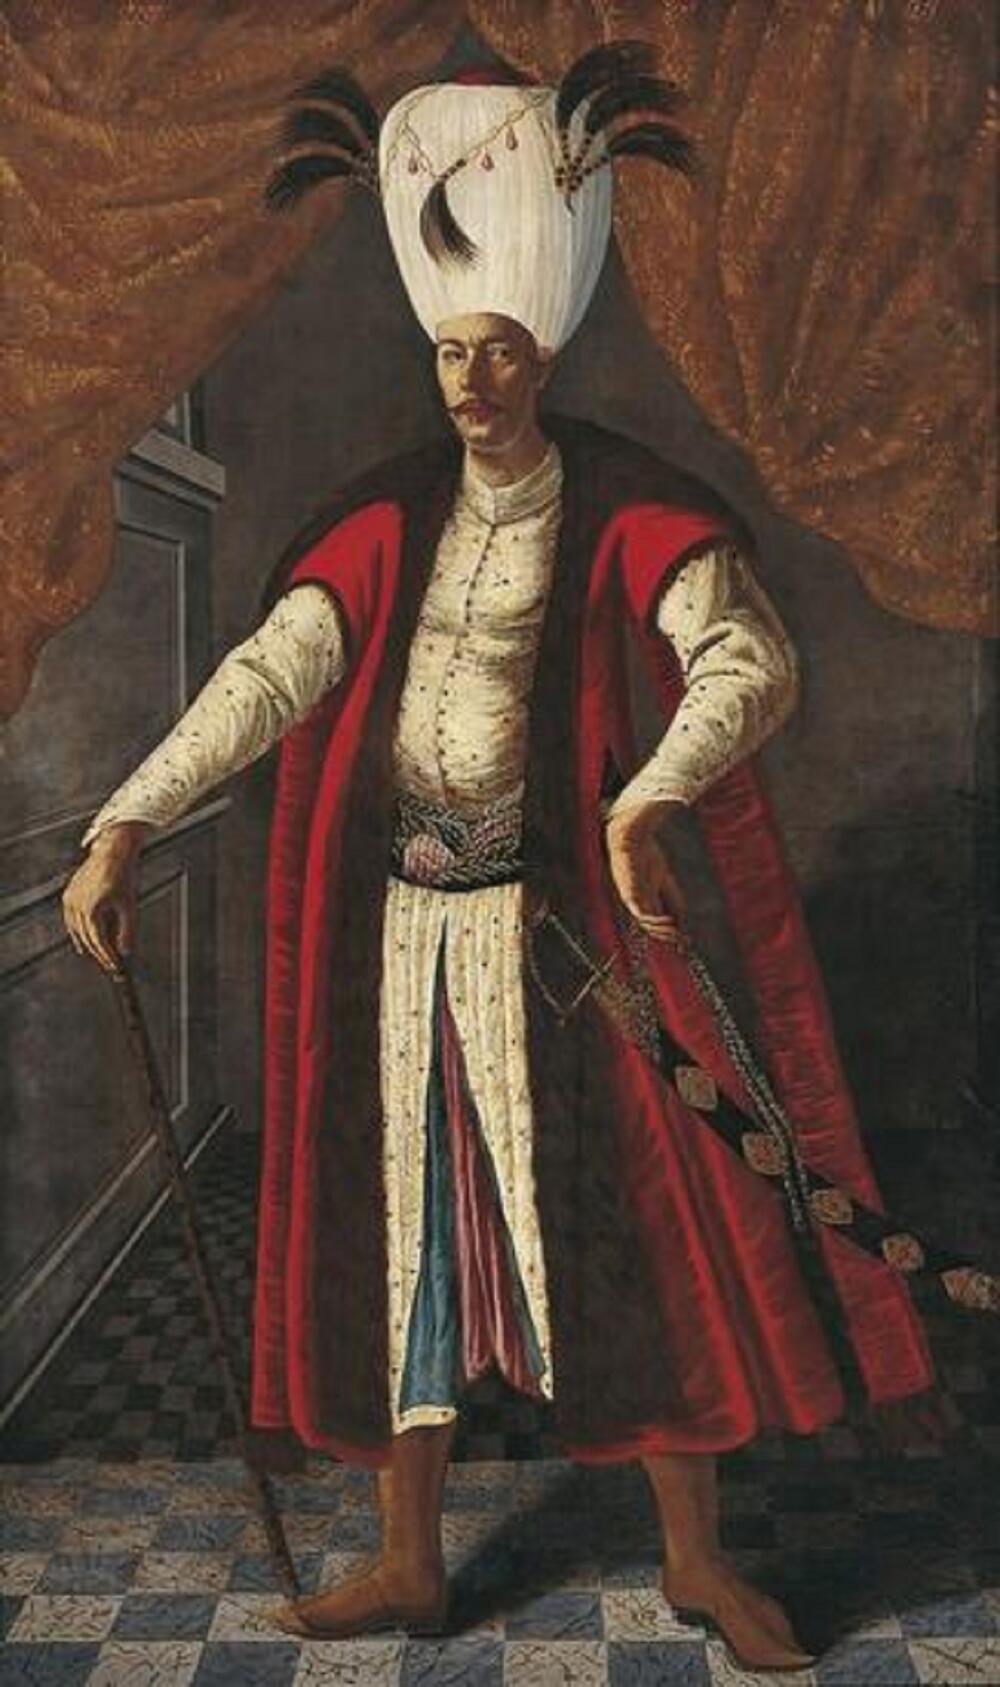 Sultan Ibrahim